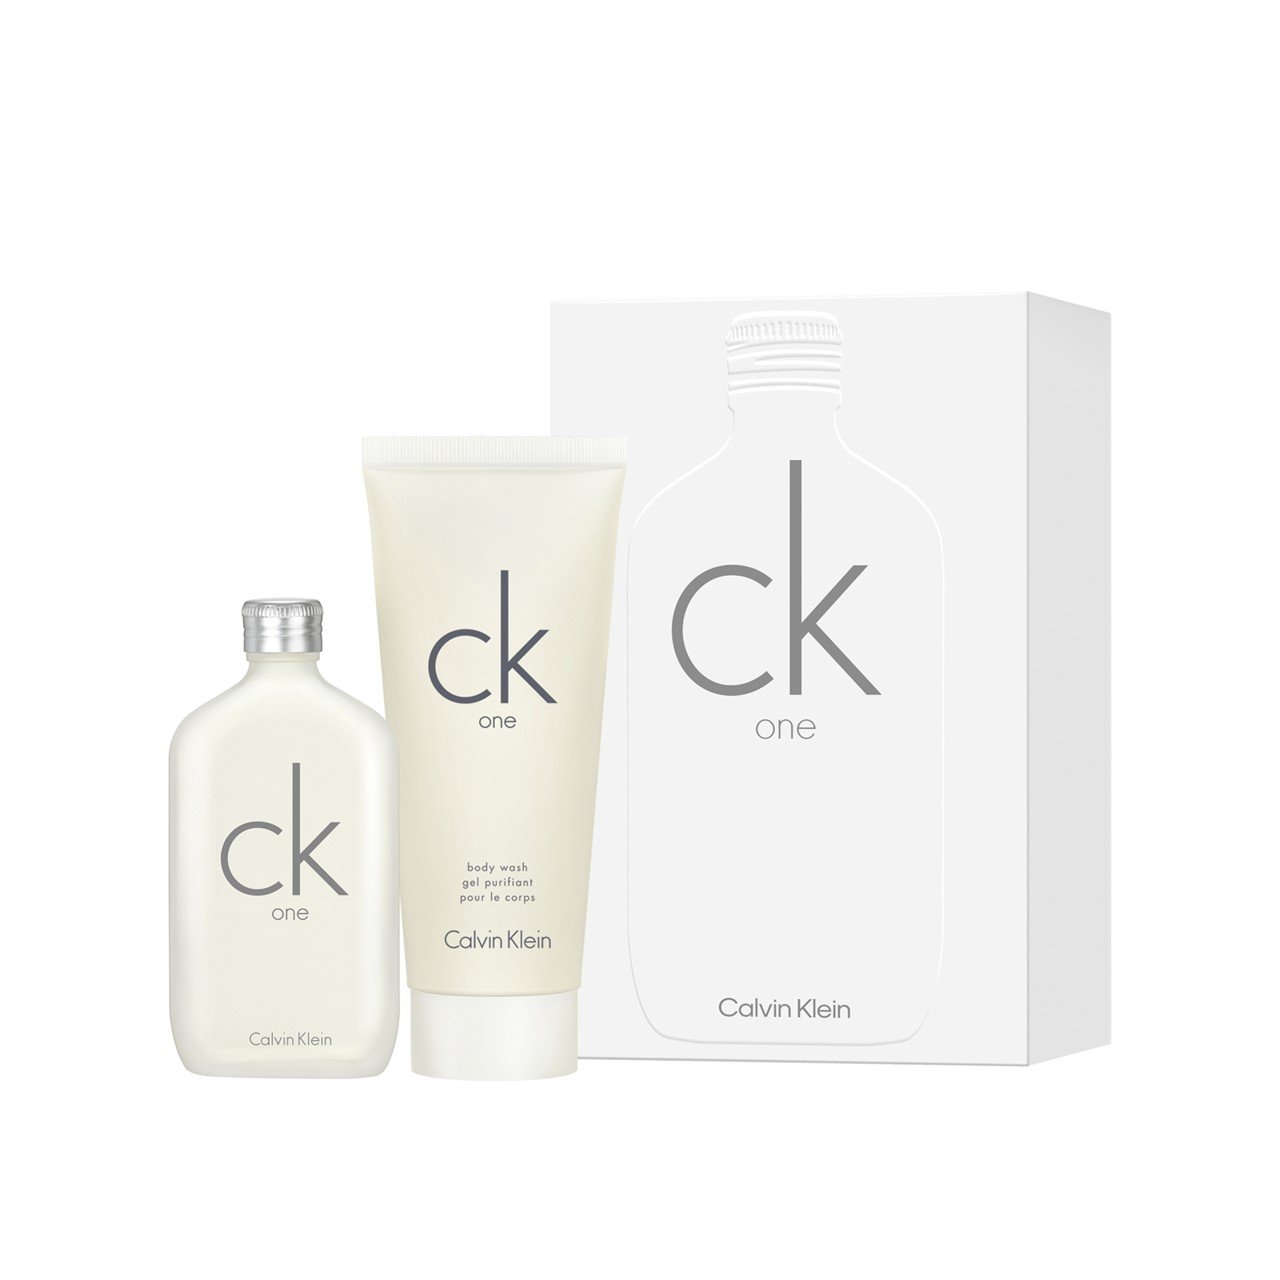 Calvin Klein CK One Eau de Toilette 50ml + Body Wash 100ml